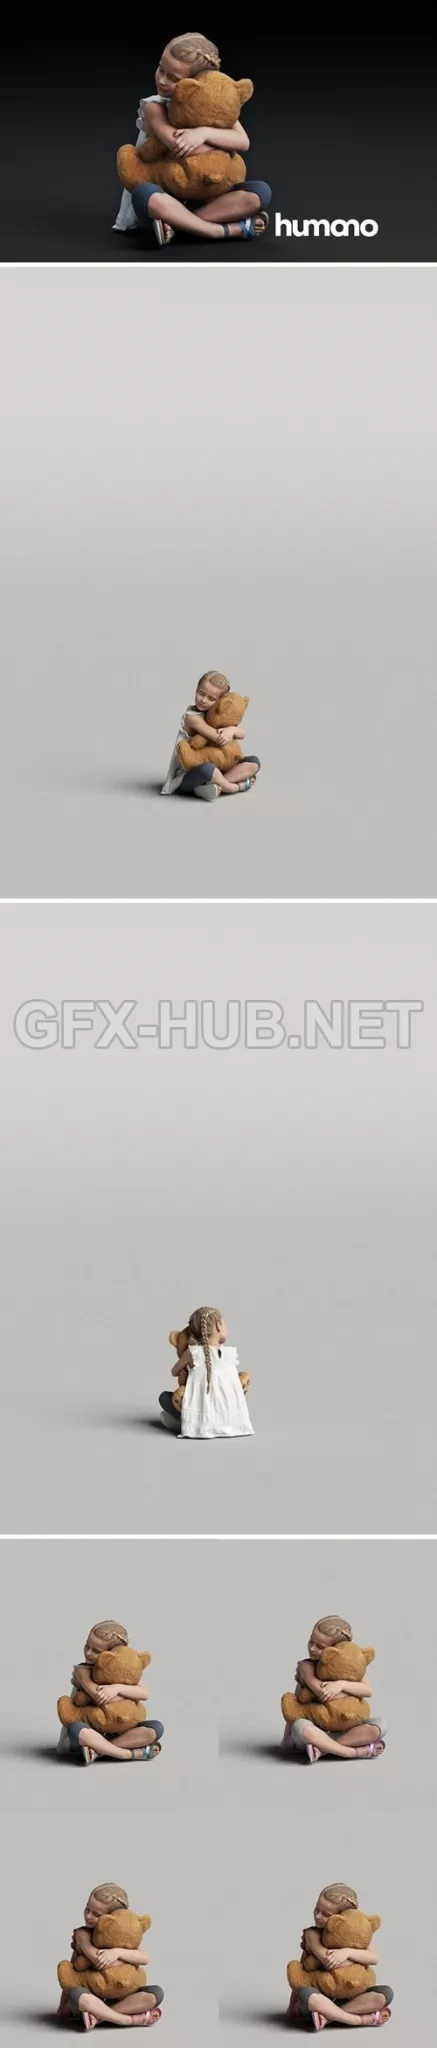 PBR Game 3D Model – Humano Girl hugging a teddy bear 0503